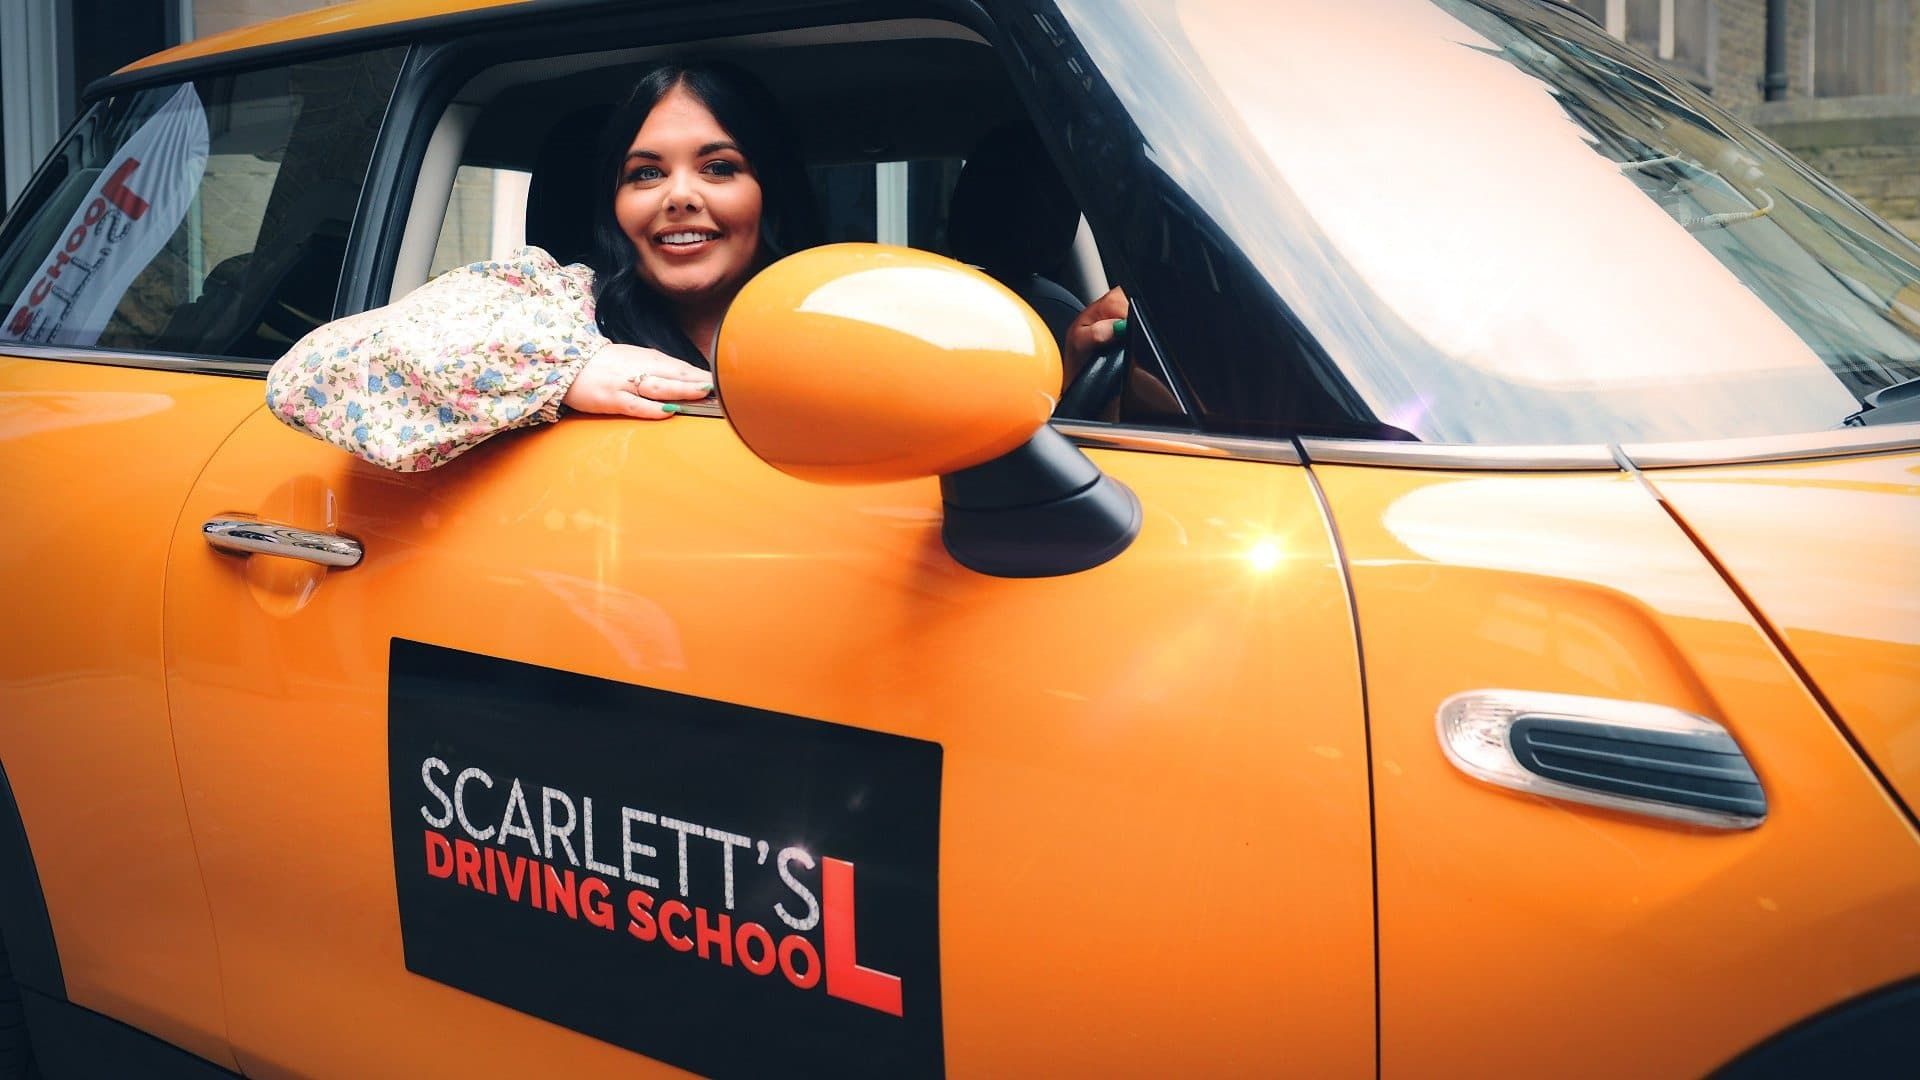 Scarlett's Driving School background